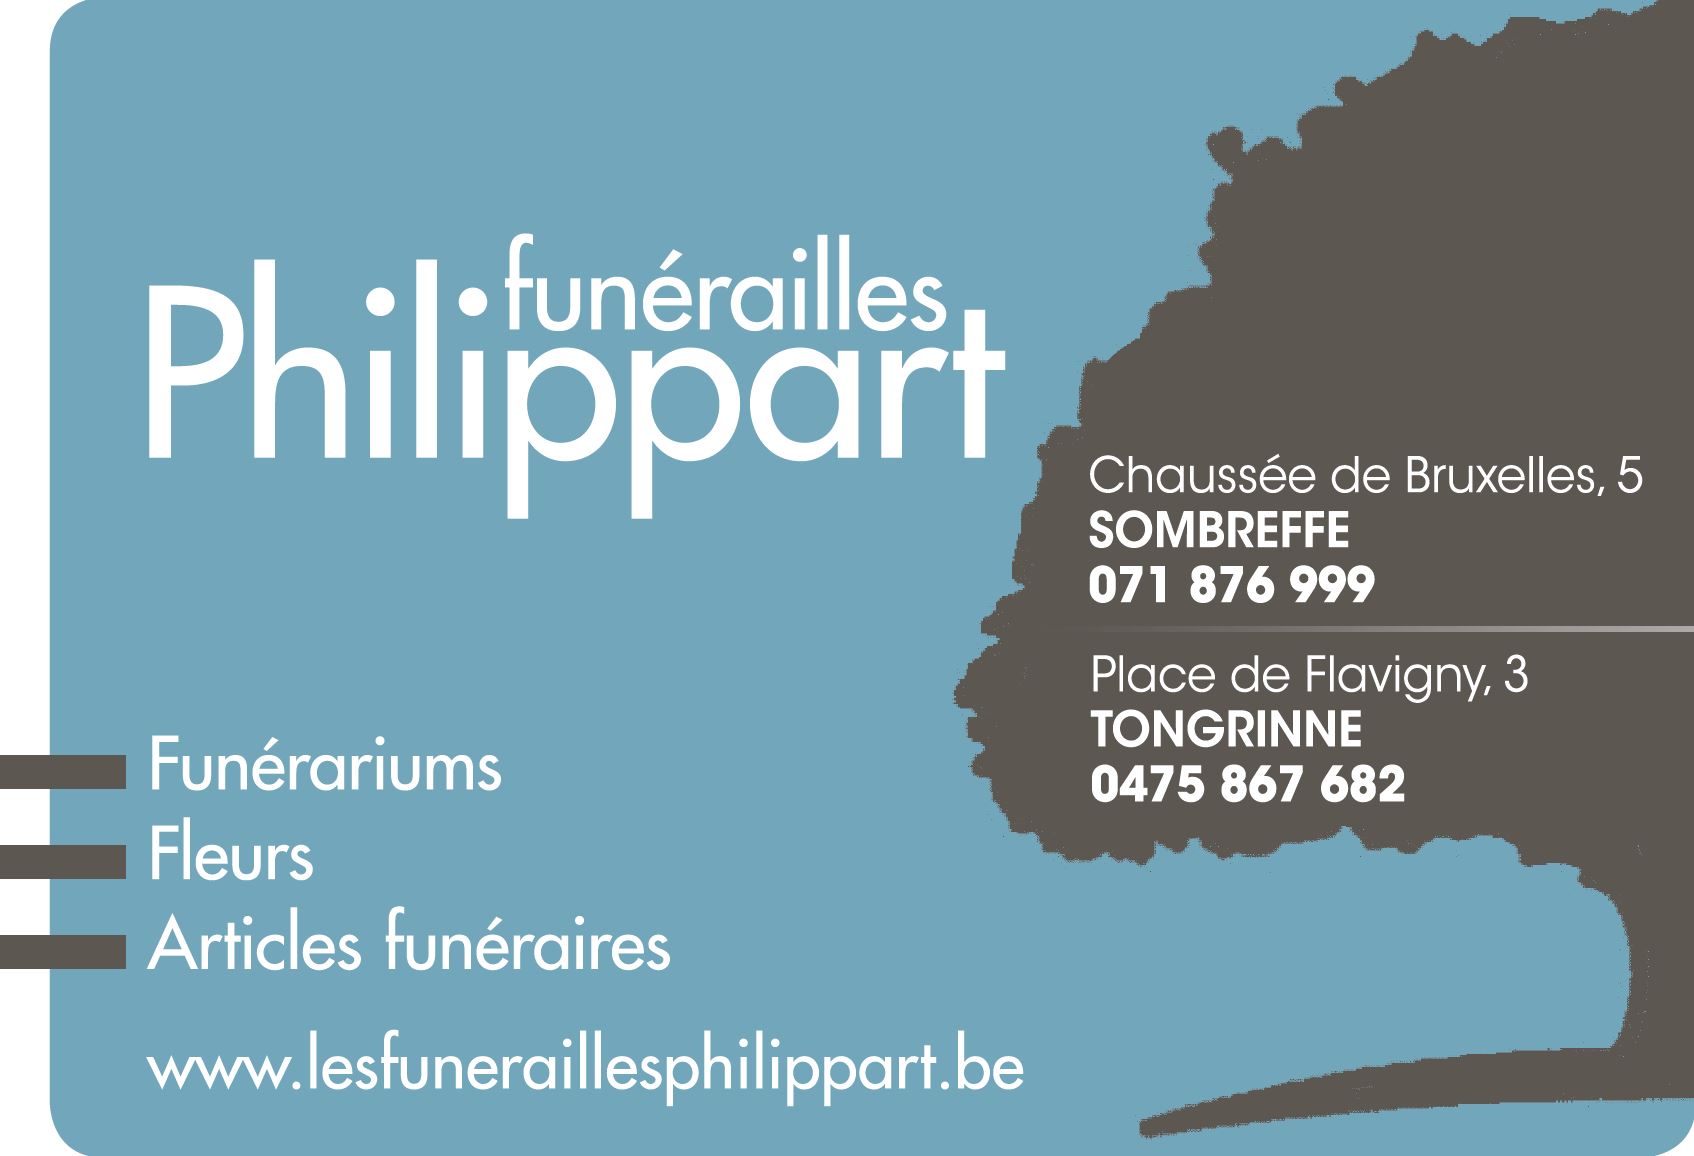 Funérailles Philippart